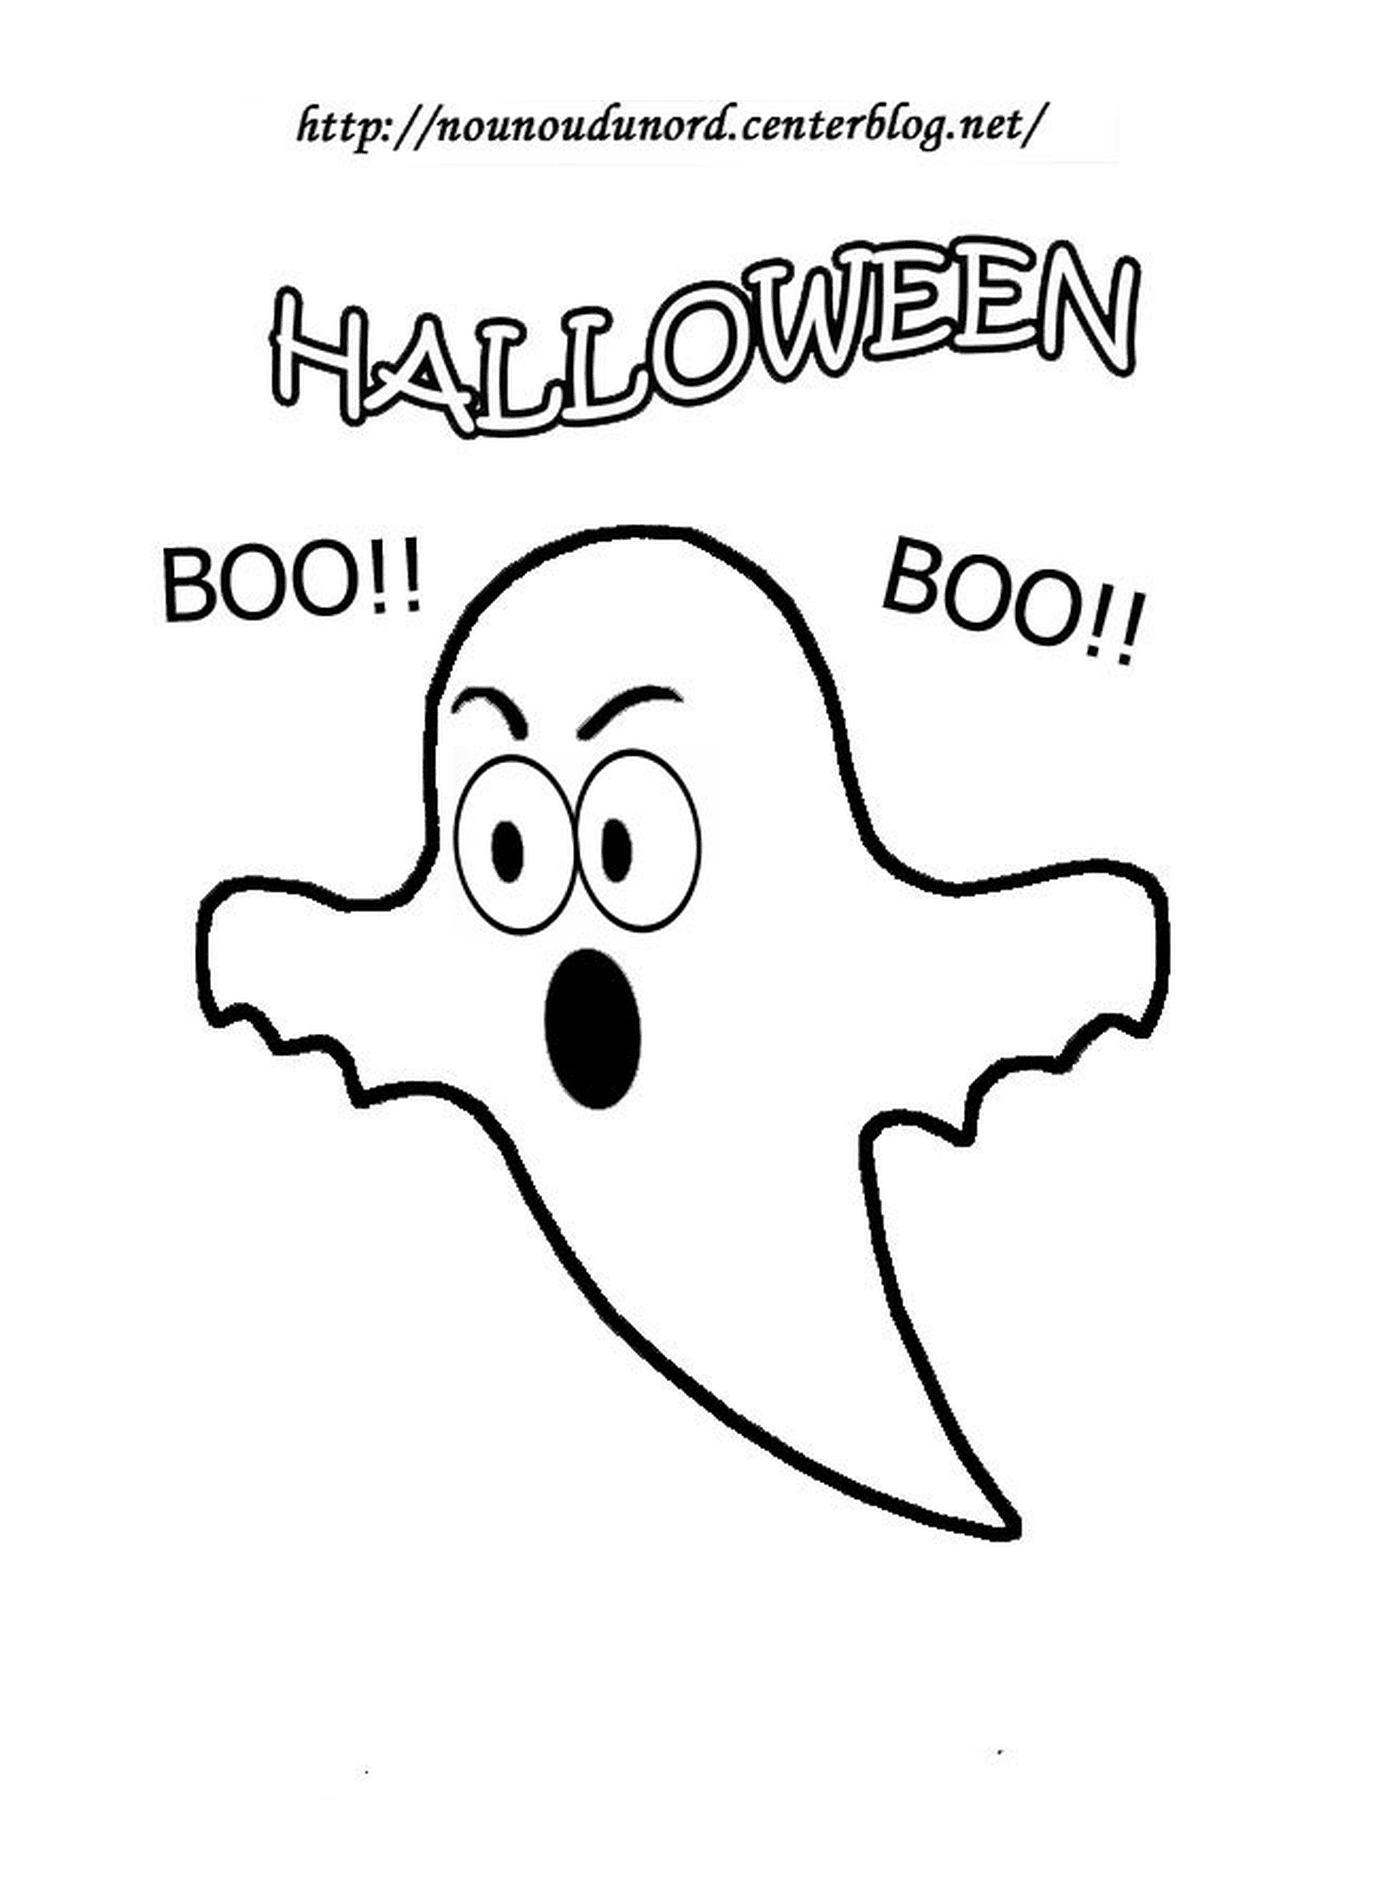  Halloween, ghost boo 